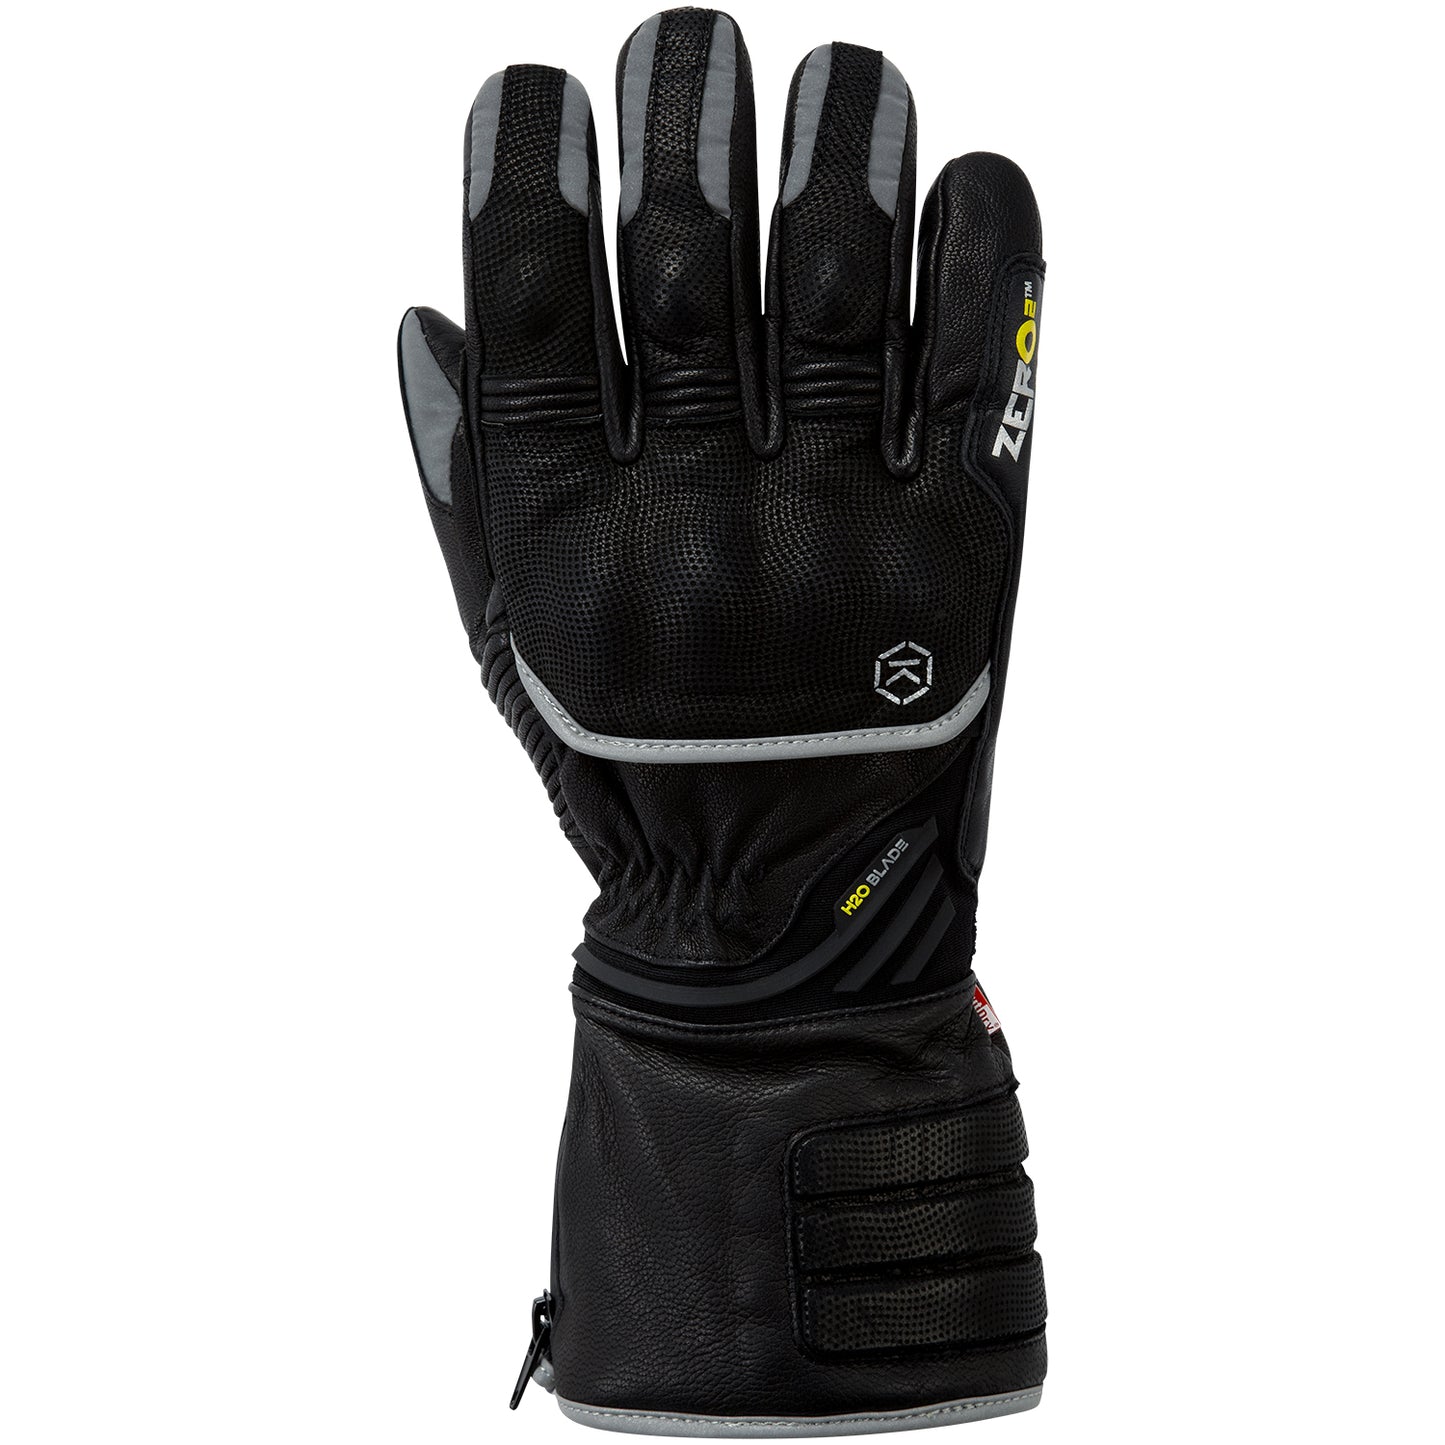 Knox Zero 2 V14 Waterproof Gloves